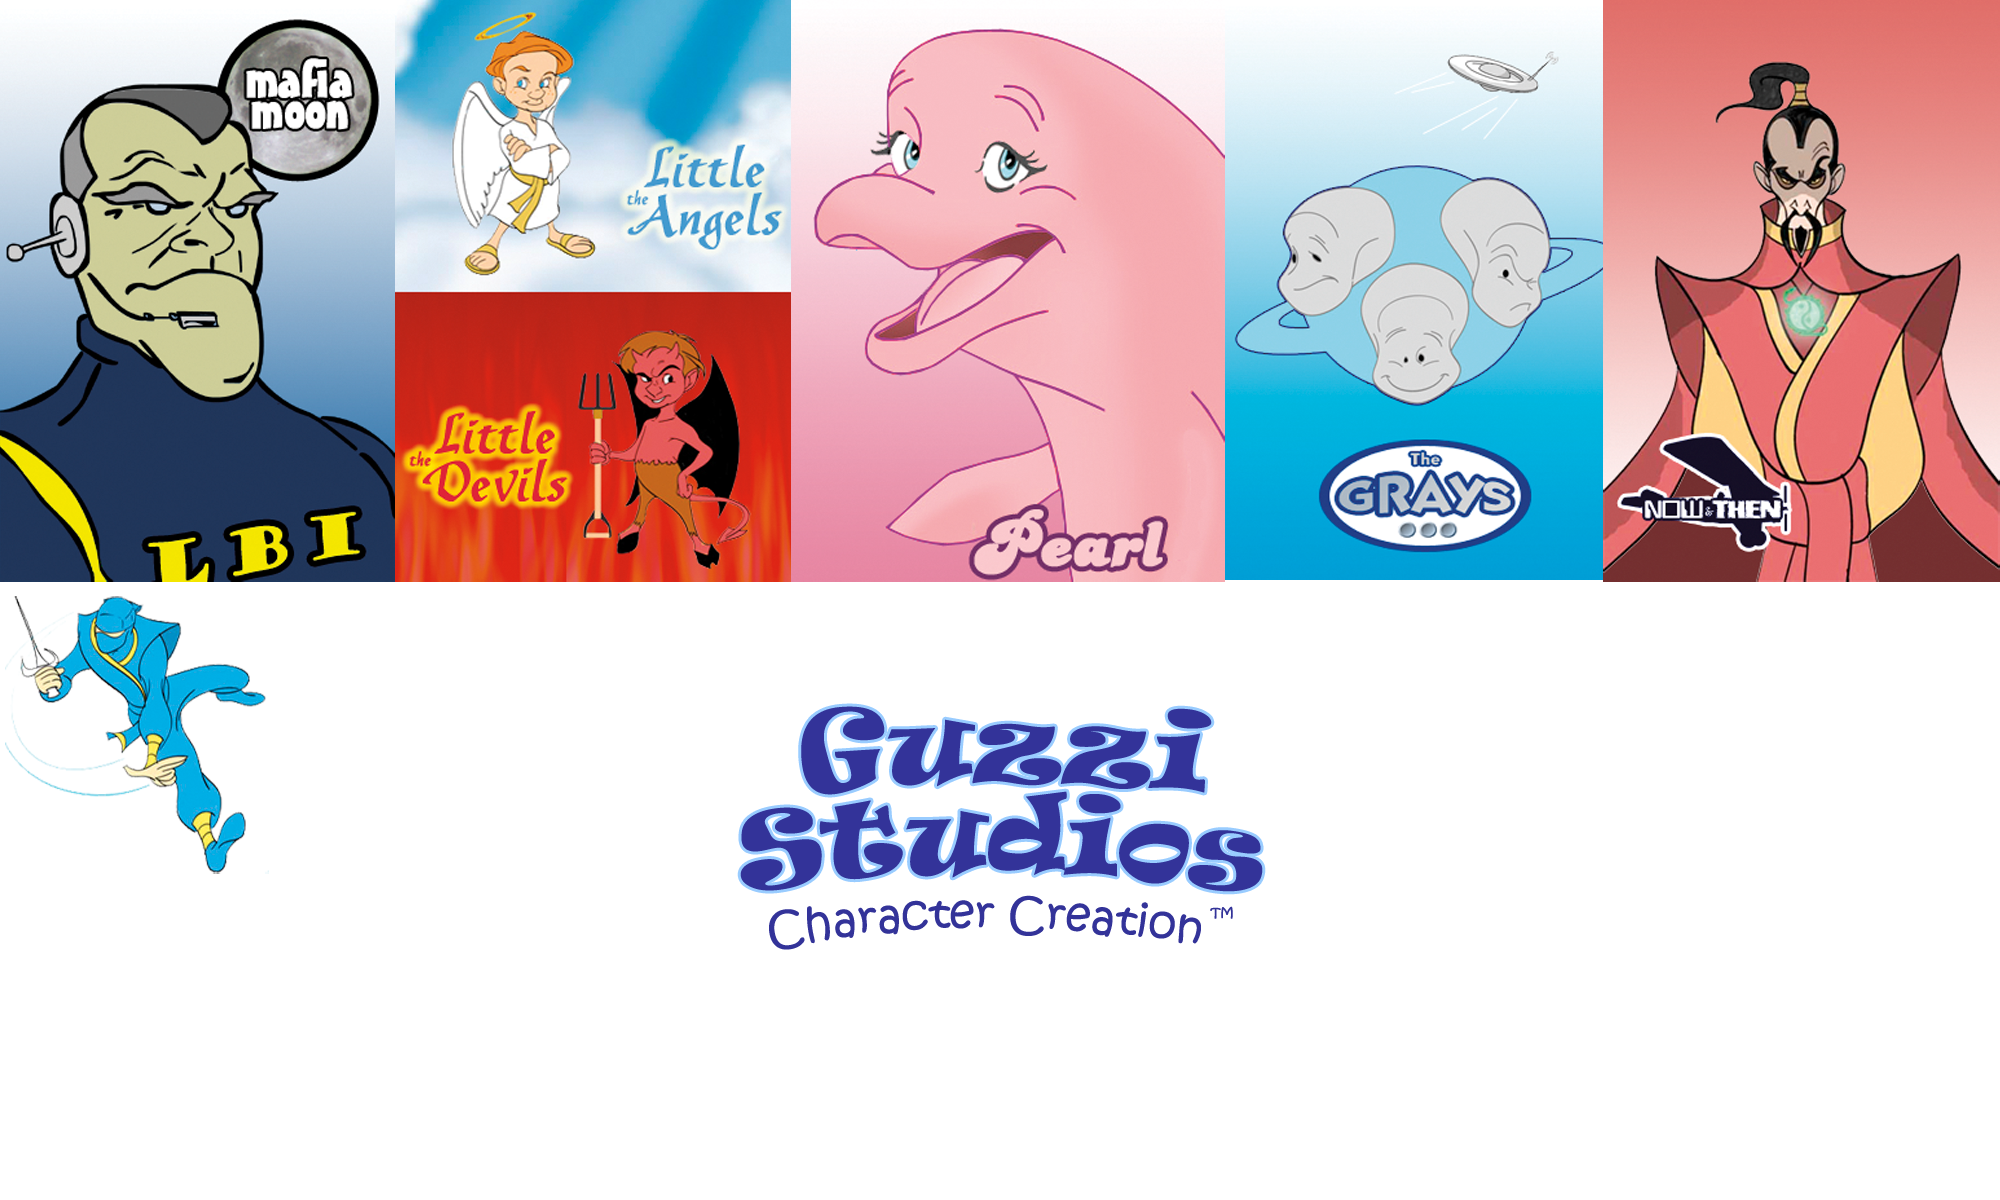 Guzzi Studios Character Creation